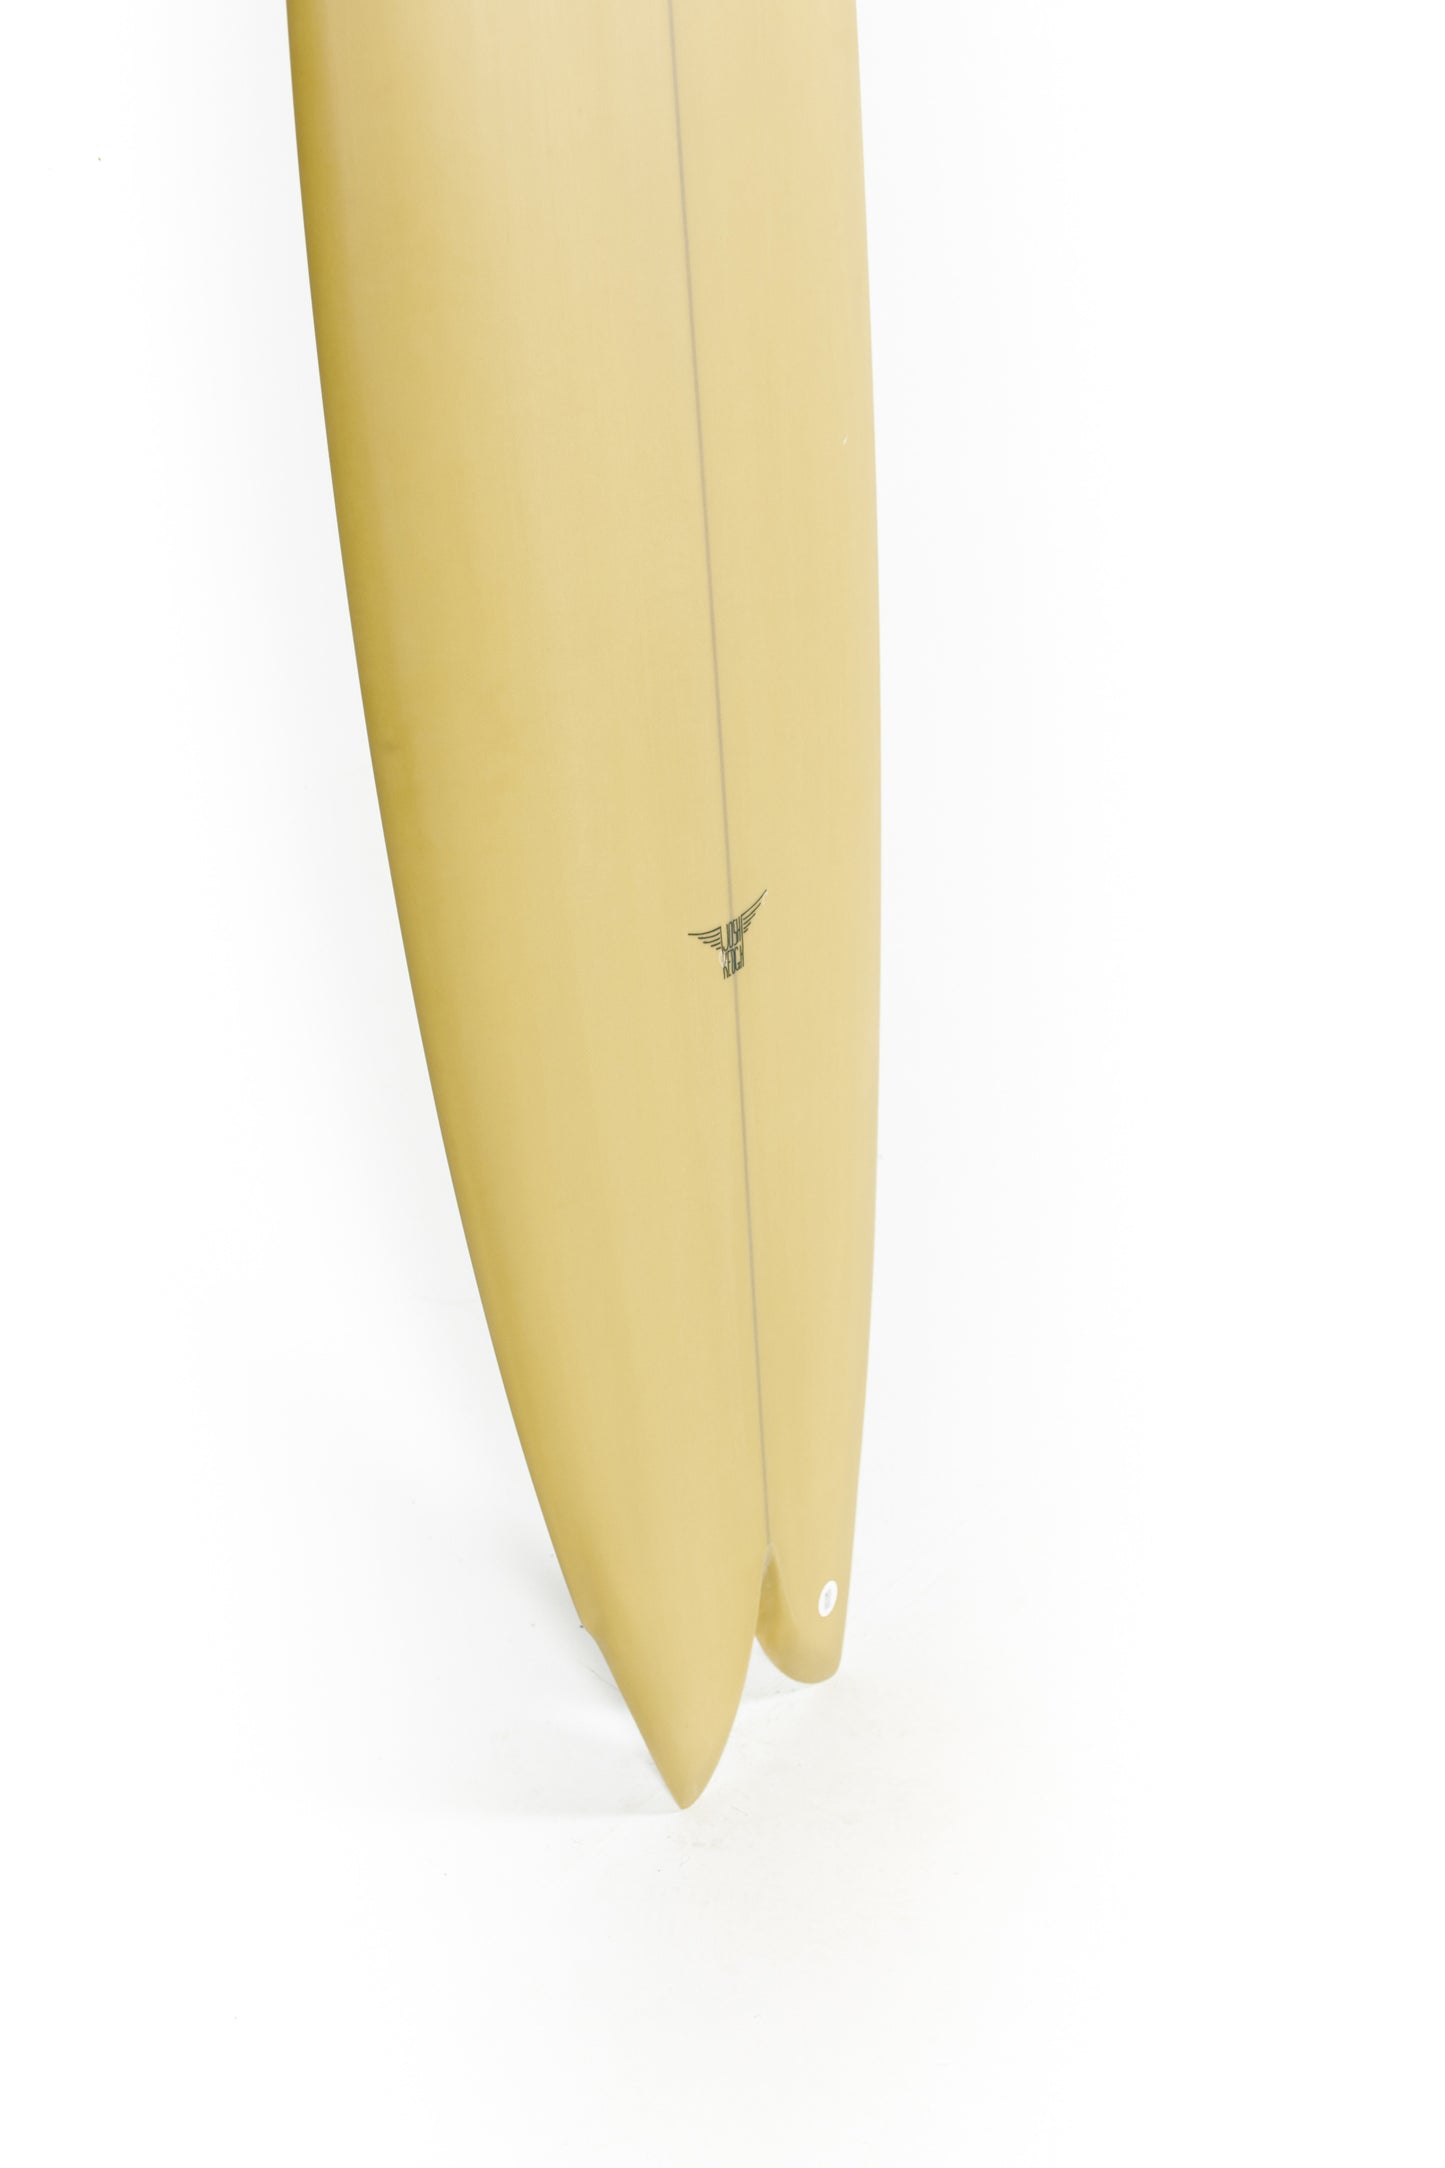 
                  
                    Pukas Surf Shop - Joshua Keogh Surfboard - M2 FLAT by Joshua Keogh - 6'8" x 20 3/4 x 2 5/8 - FLAT68
                  
                